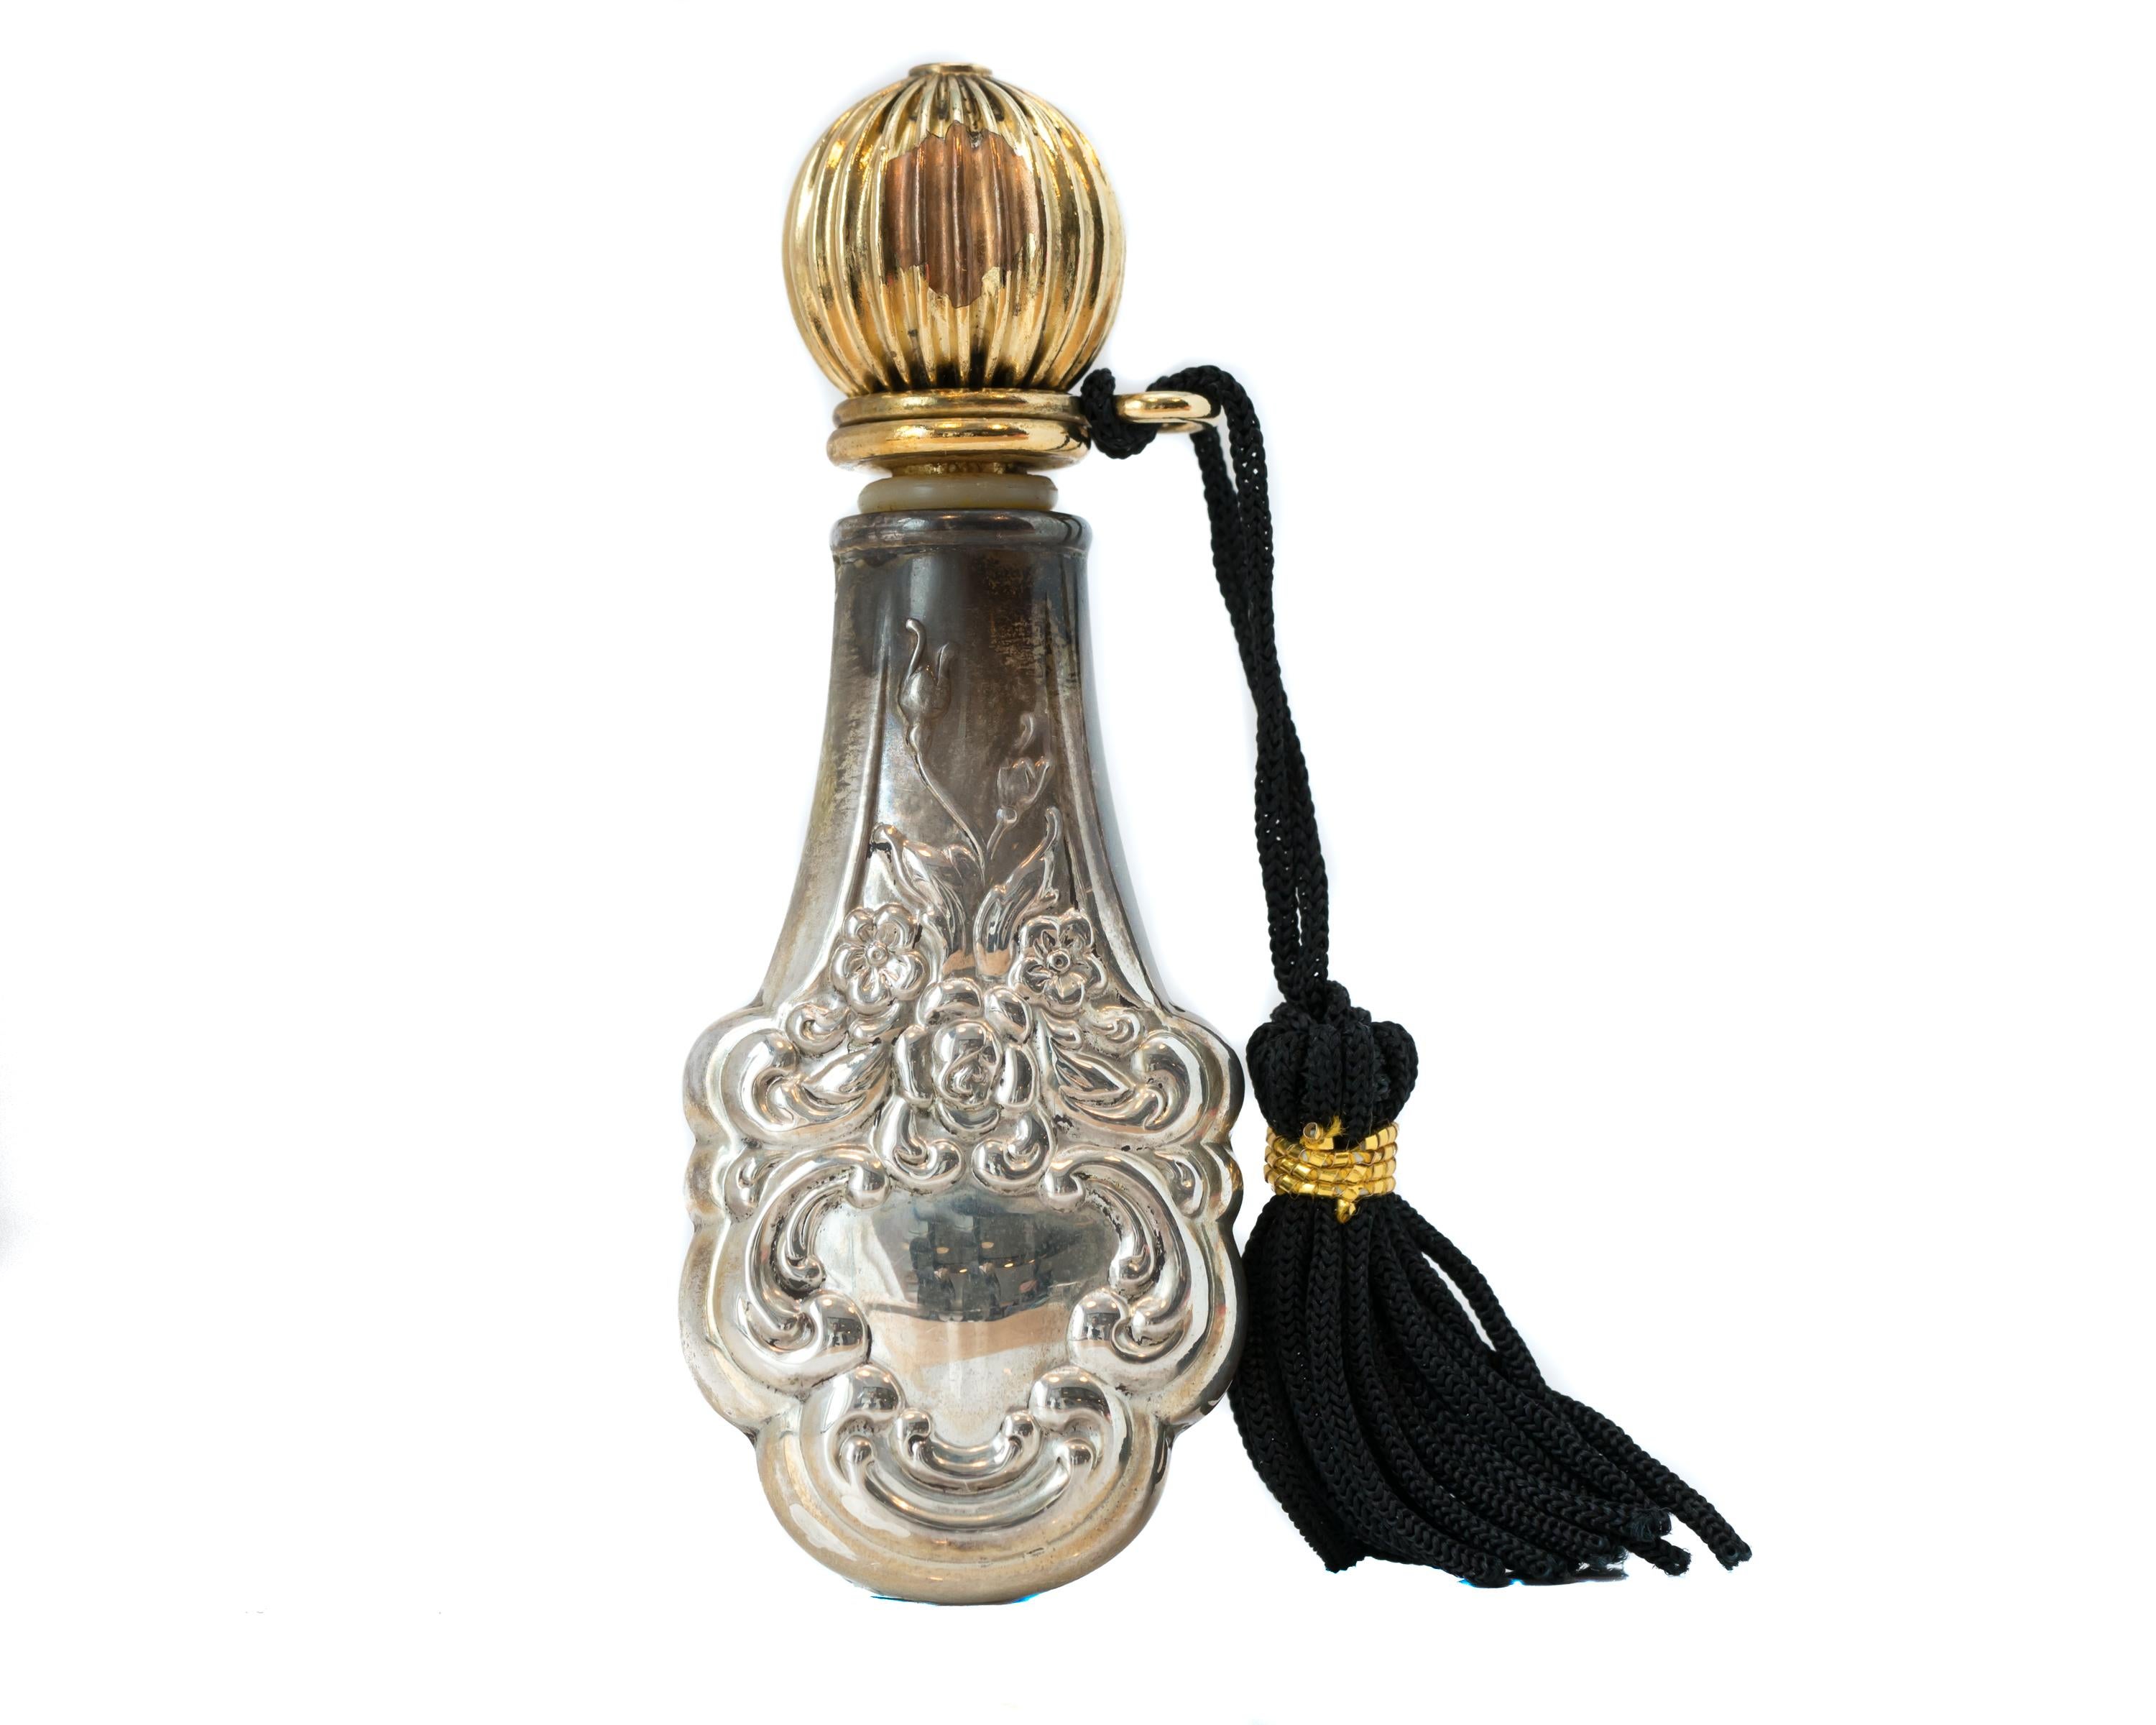 1920s perfume bottle